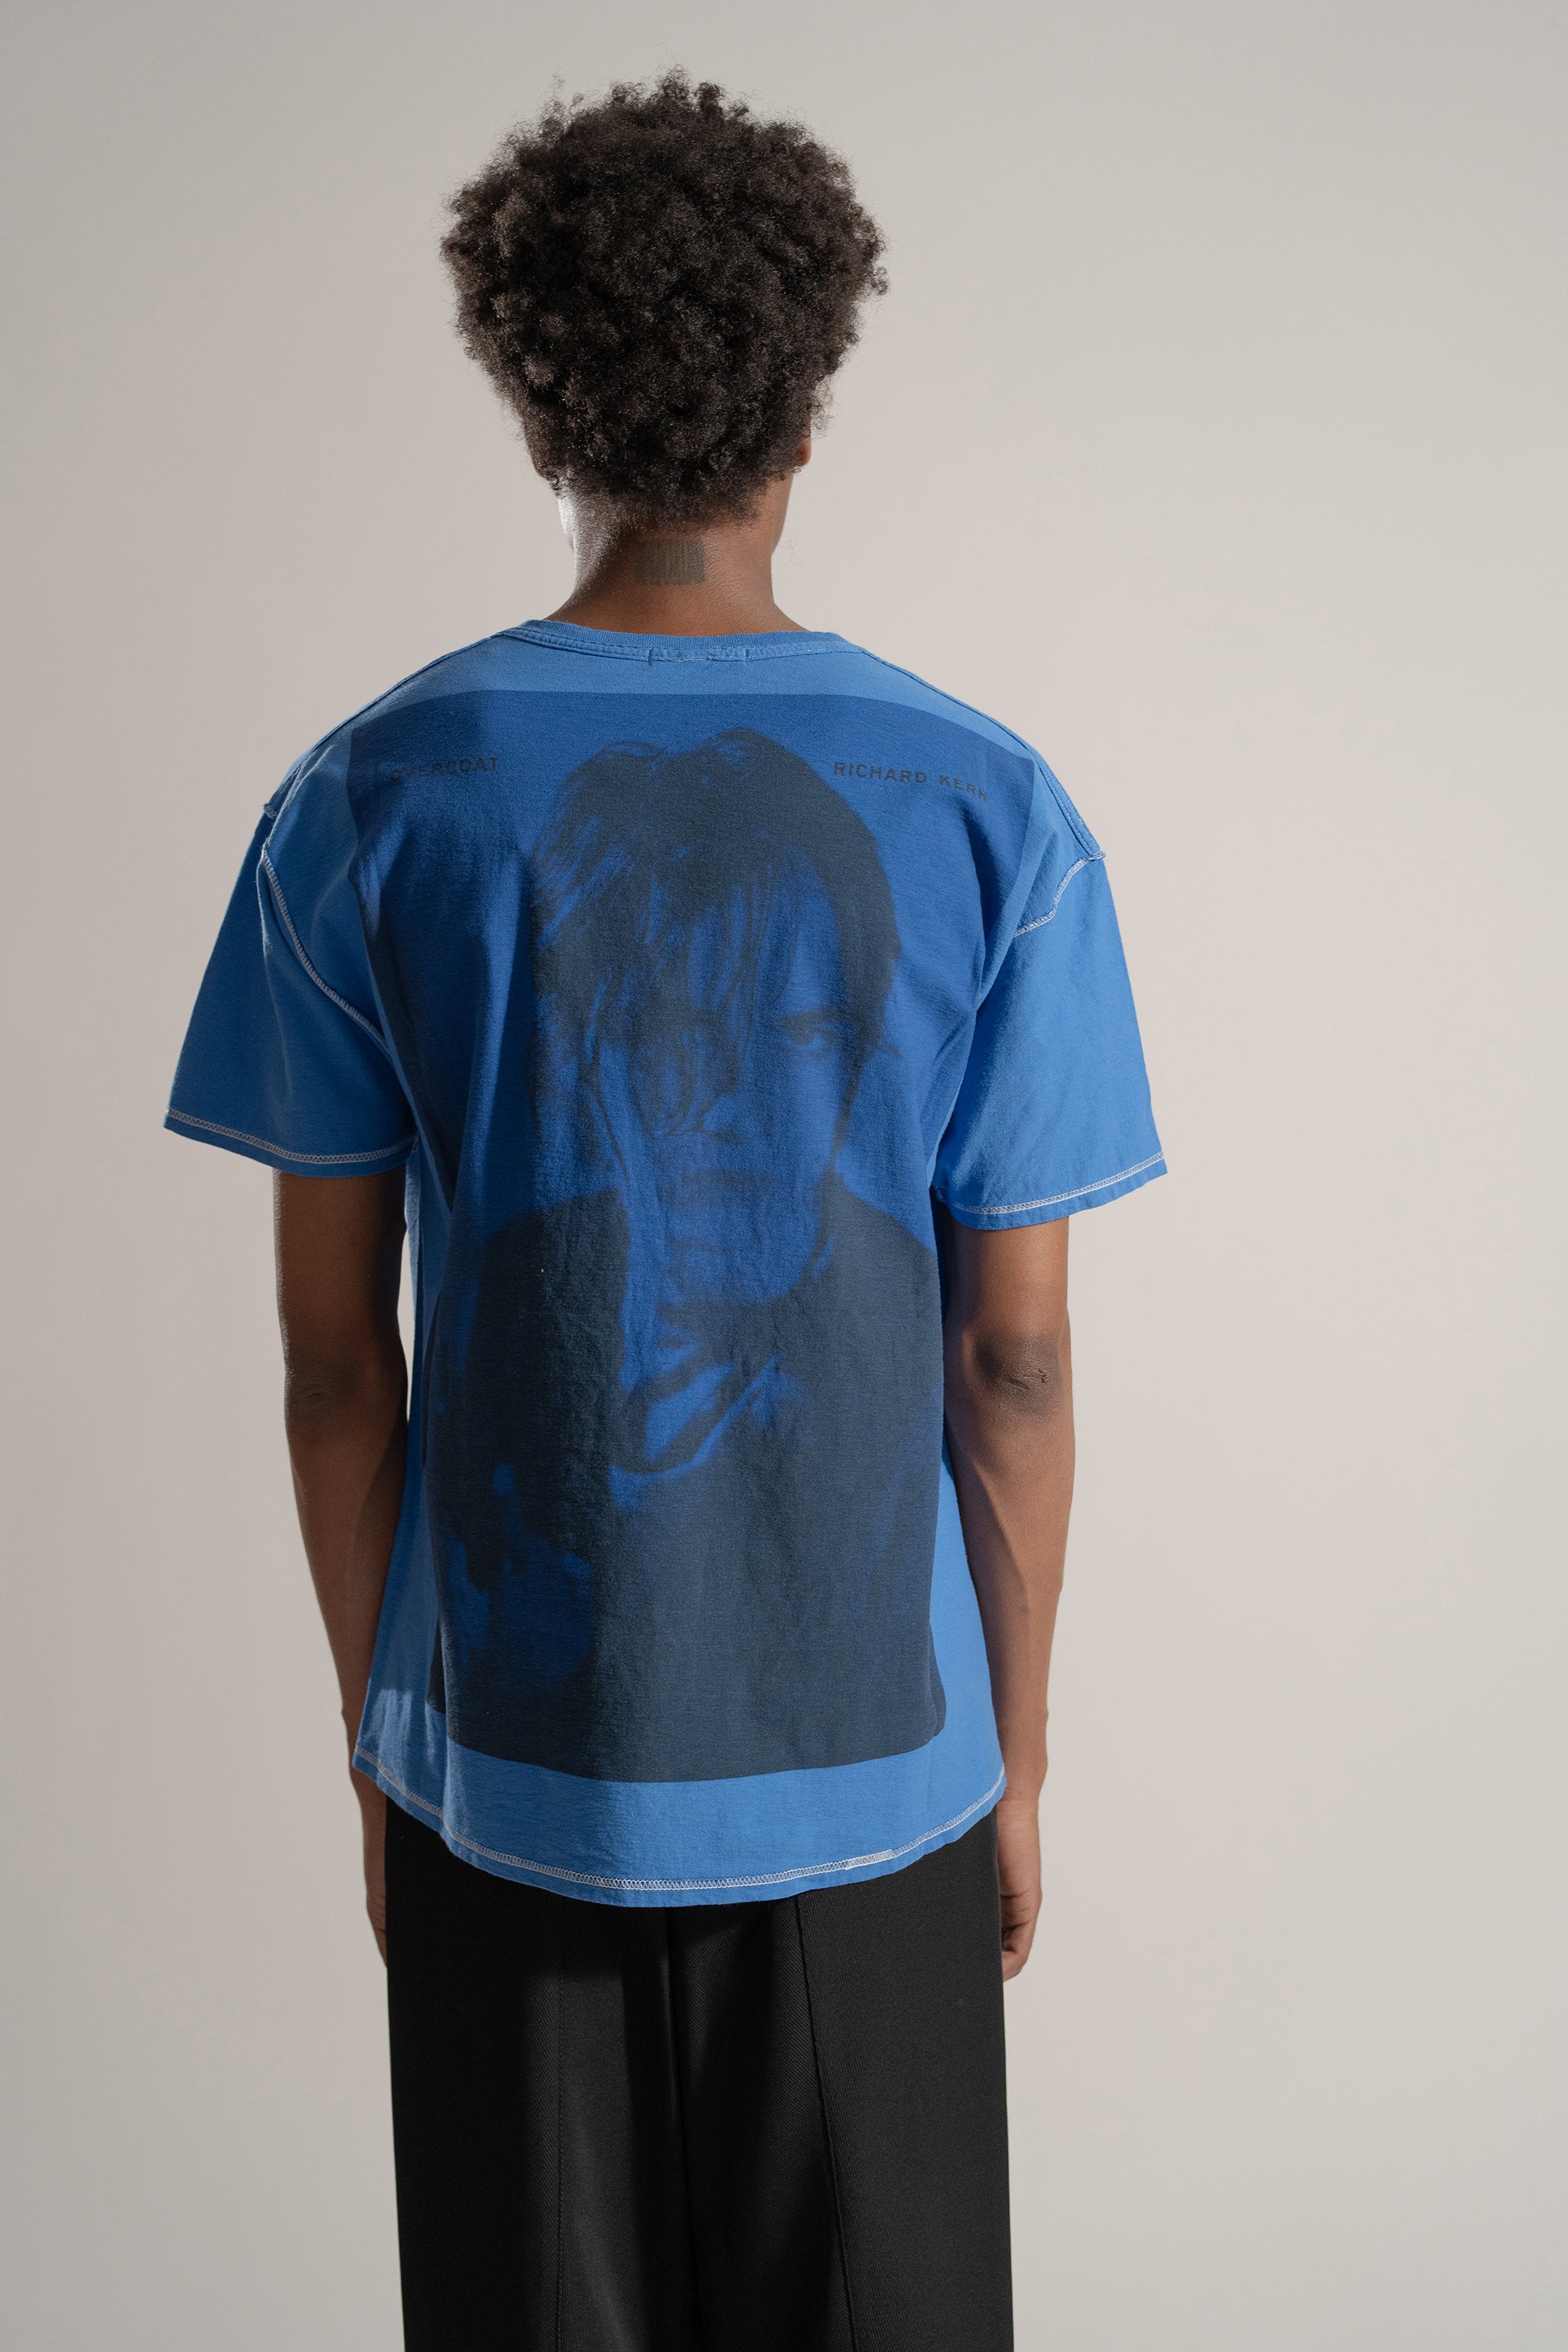 Overcoat x Richard Kern Collaboration T-shirt in Blue